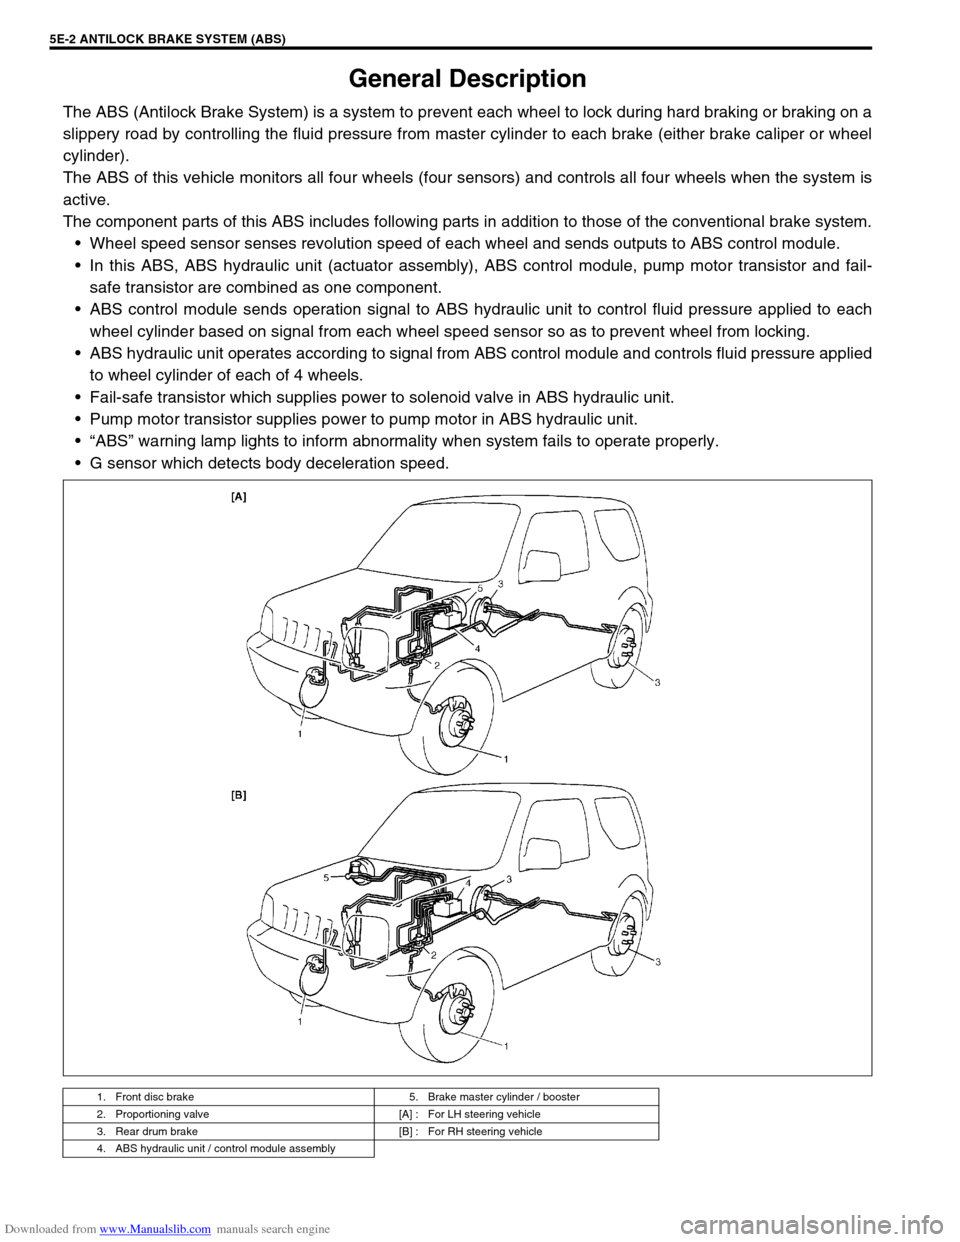 SUZUKI JIMNY 2005 3.G Service Workshop Manual Downloaded from www.Manualslib.com manuals search engine 5E-2 ANTILOCK BRAKE SYSTEM (ABS)
General Description
The ABS (Antilock Brake System) is a system to prevent each wheel to lock during hard brak